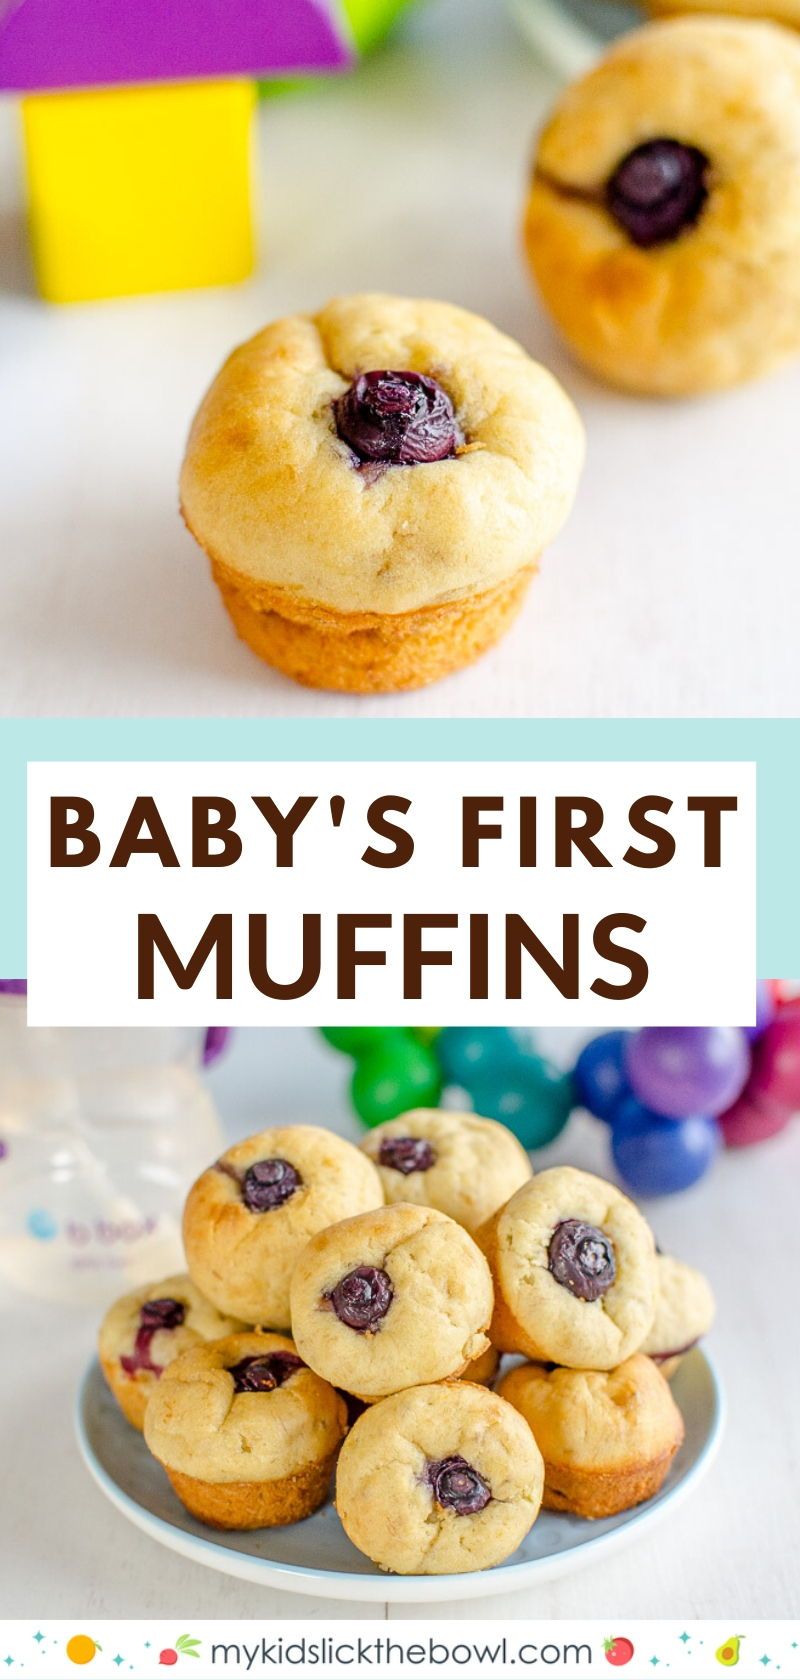 Banana Blueberry Muffins - No added Sugar!